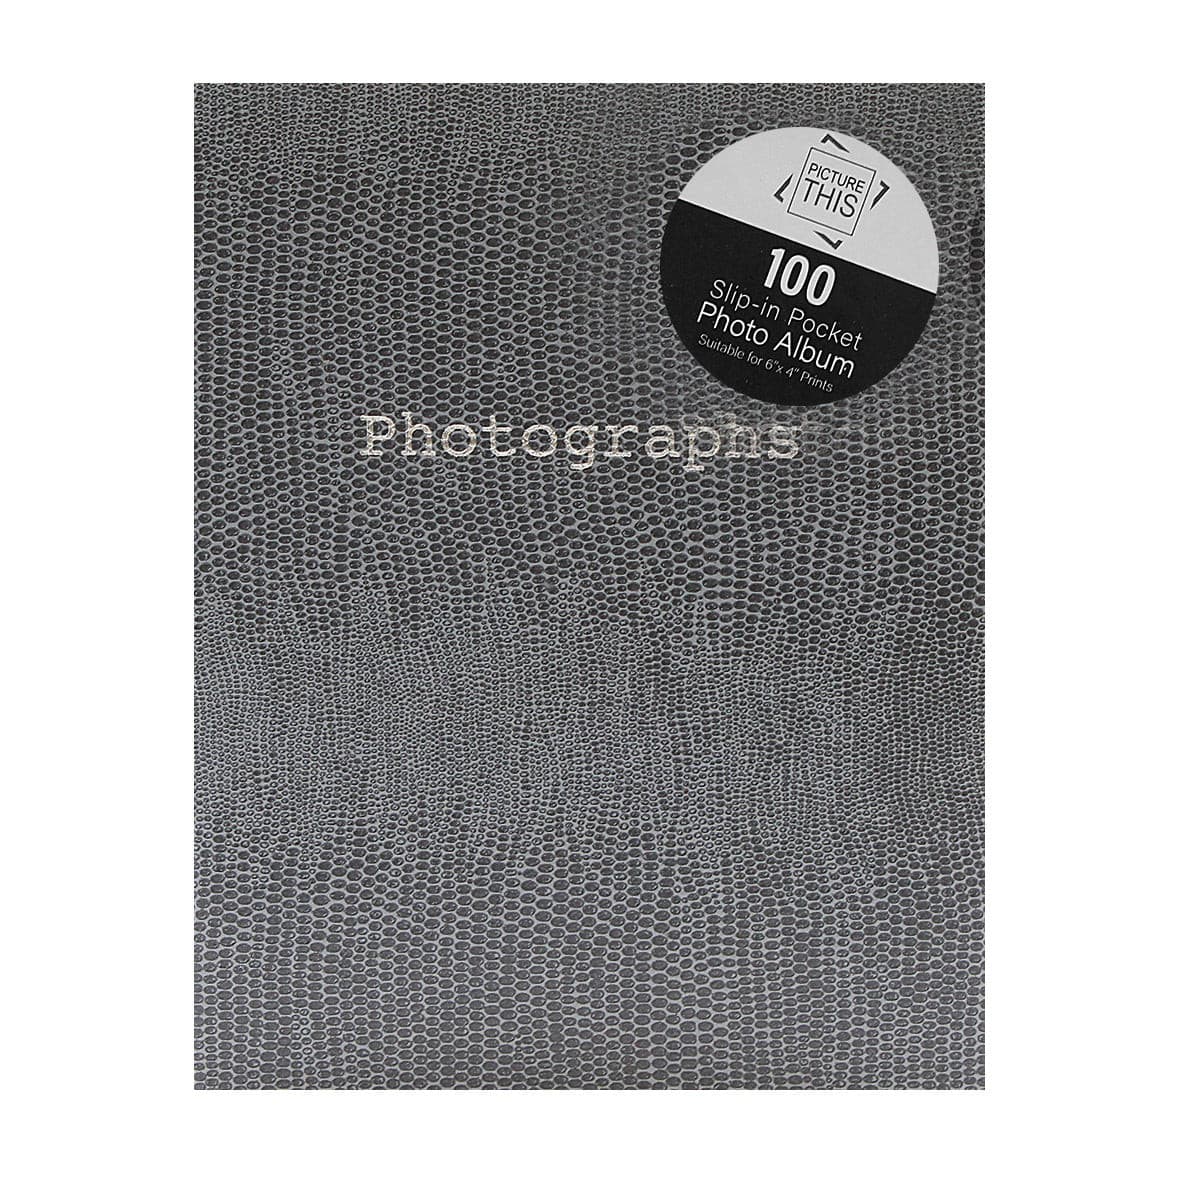 Photo Album 100 Pockets - 6x4 (Design-4).